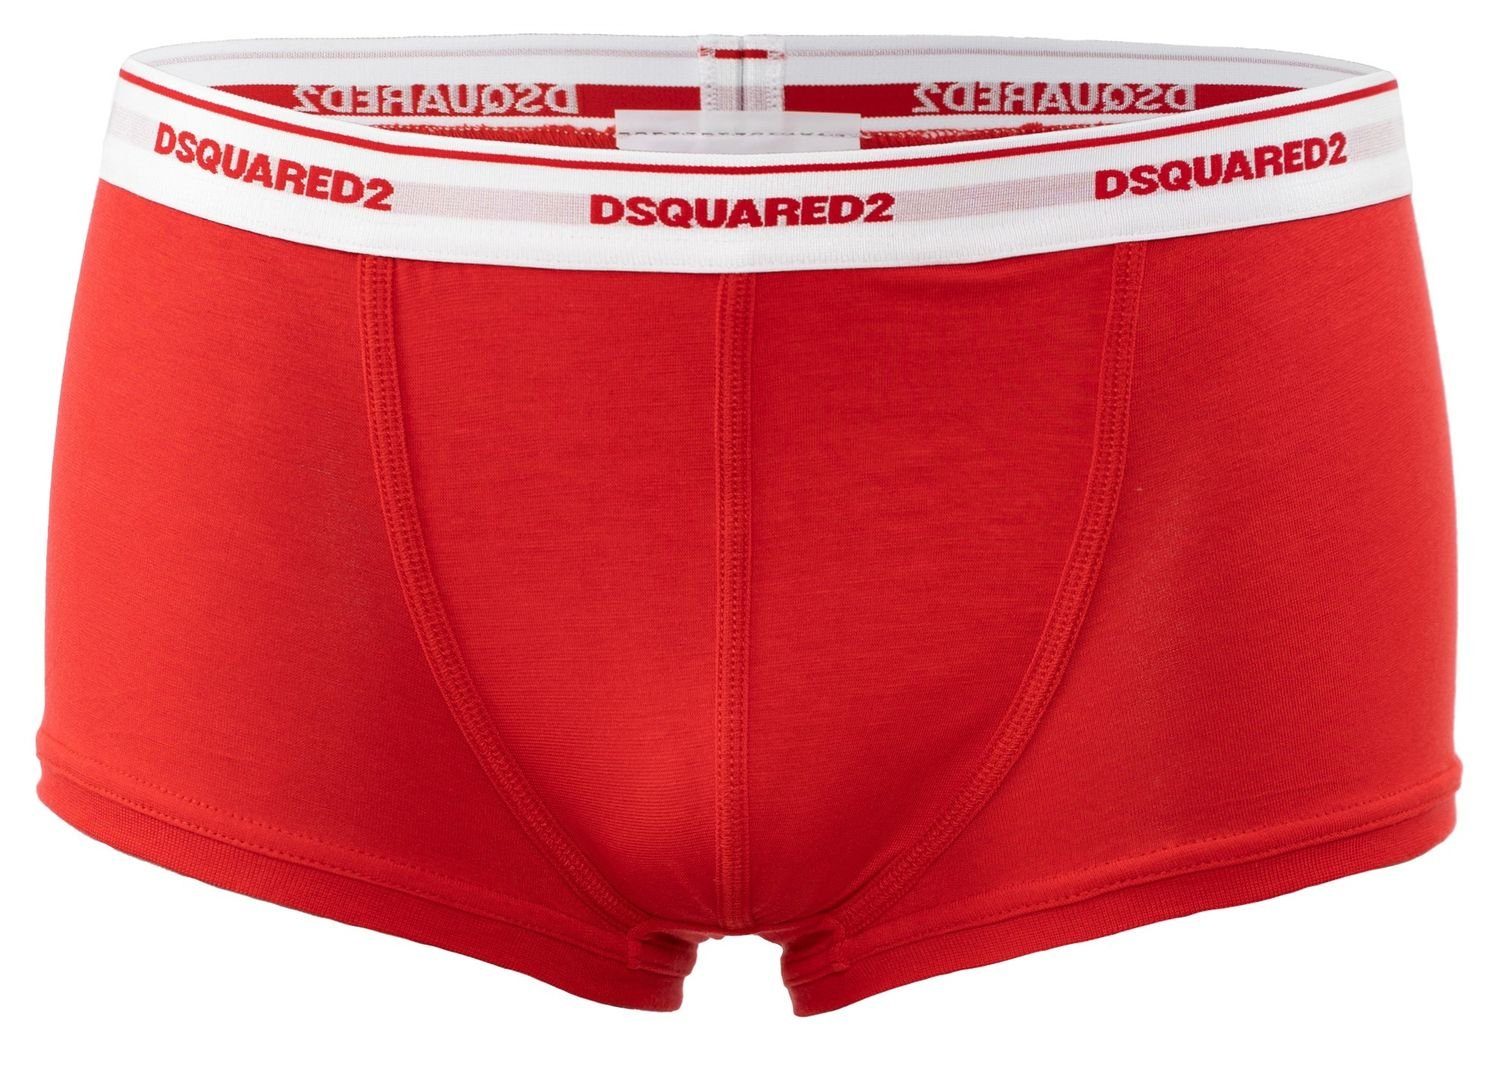 Dsquared2 Trunk Dsquared2 Boxershorts / Pants / Shorts / Boxer Stretch in rot Größe M / L / XL / XXL (1-St)